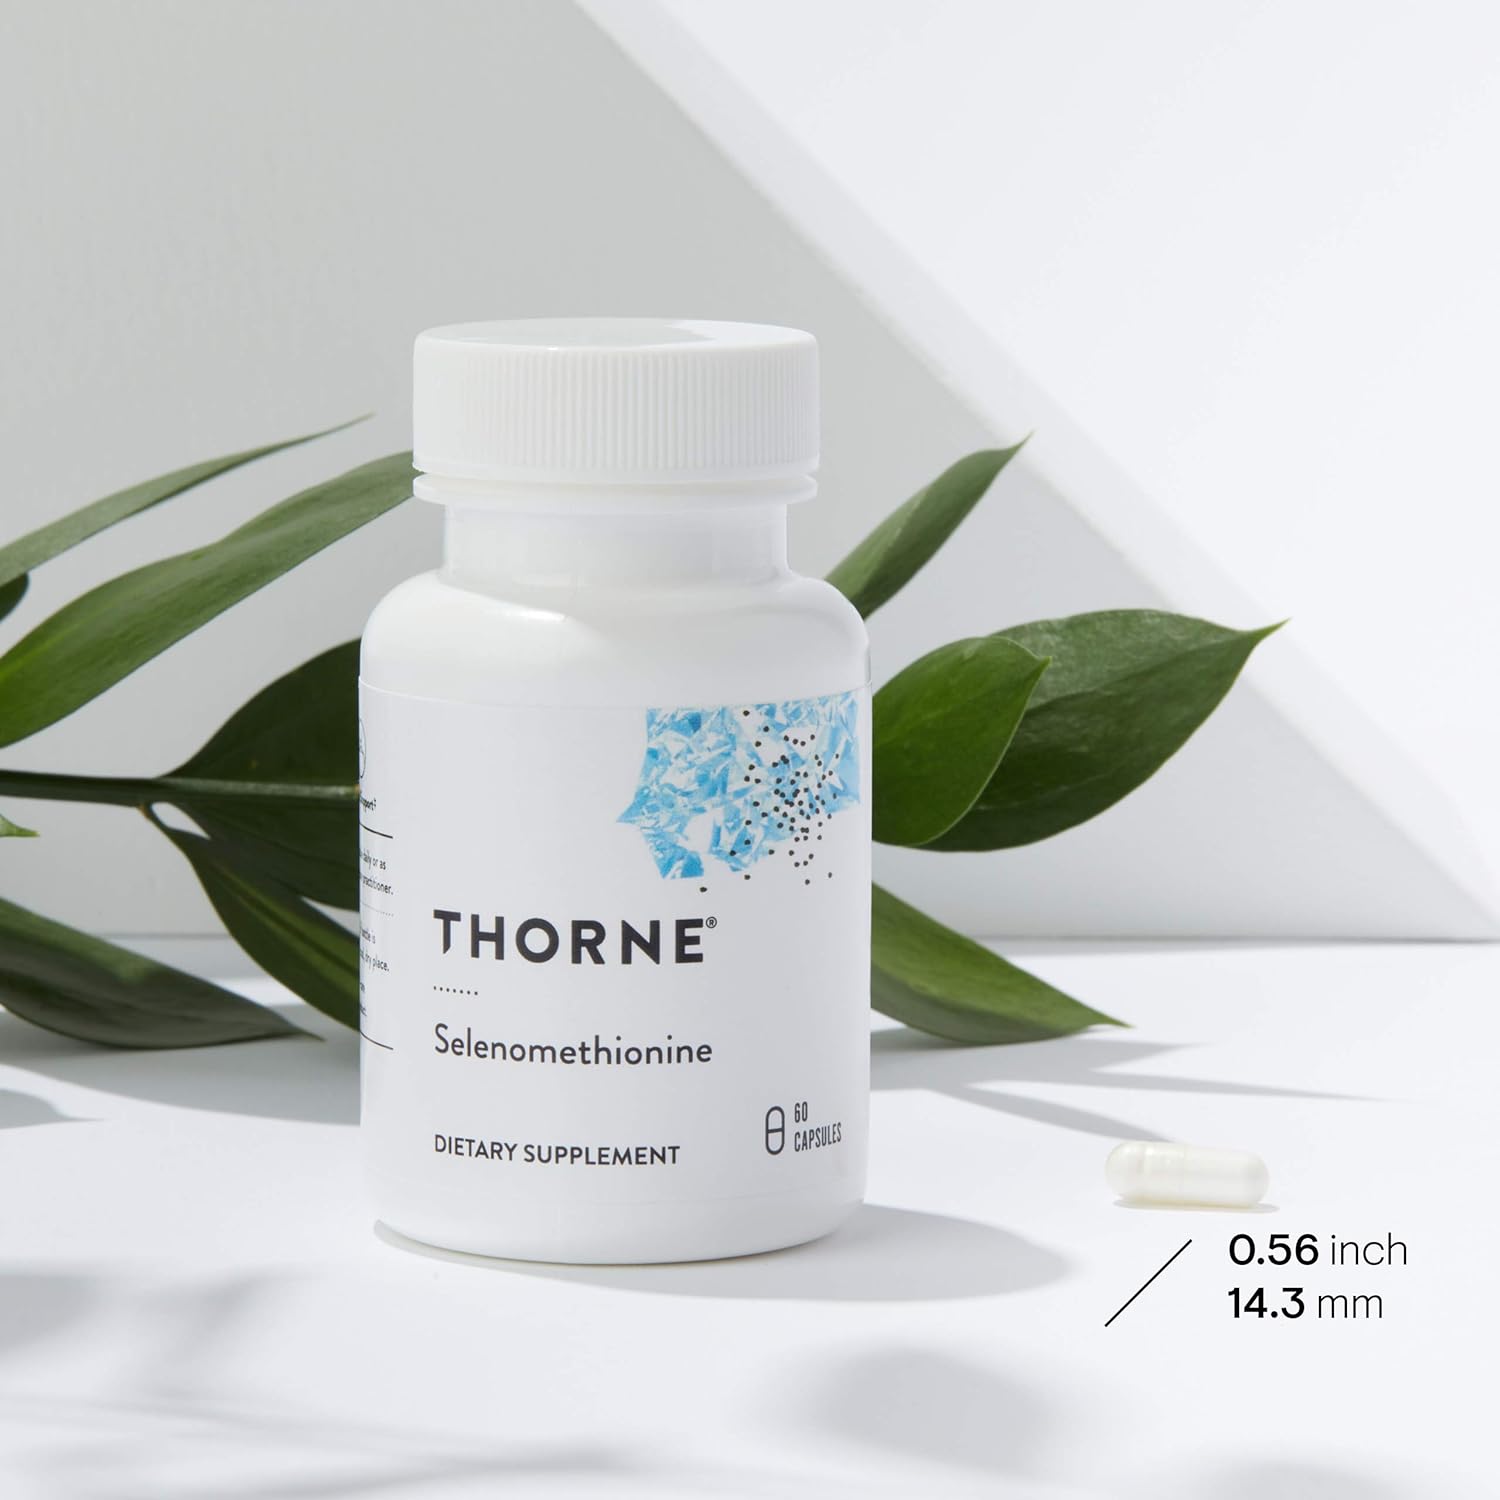 Thorne Selenium - 200 mcg Selenium Supplement for Antioxidant Support 